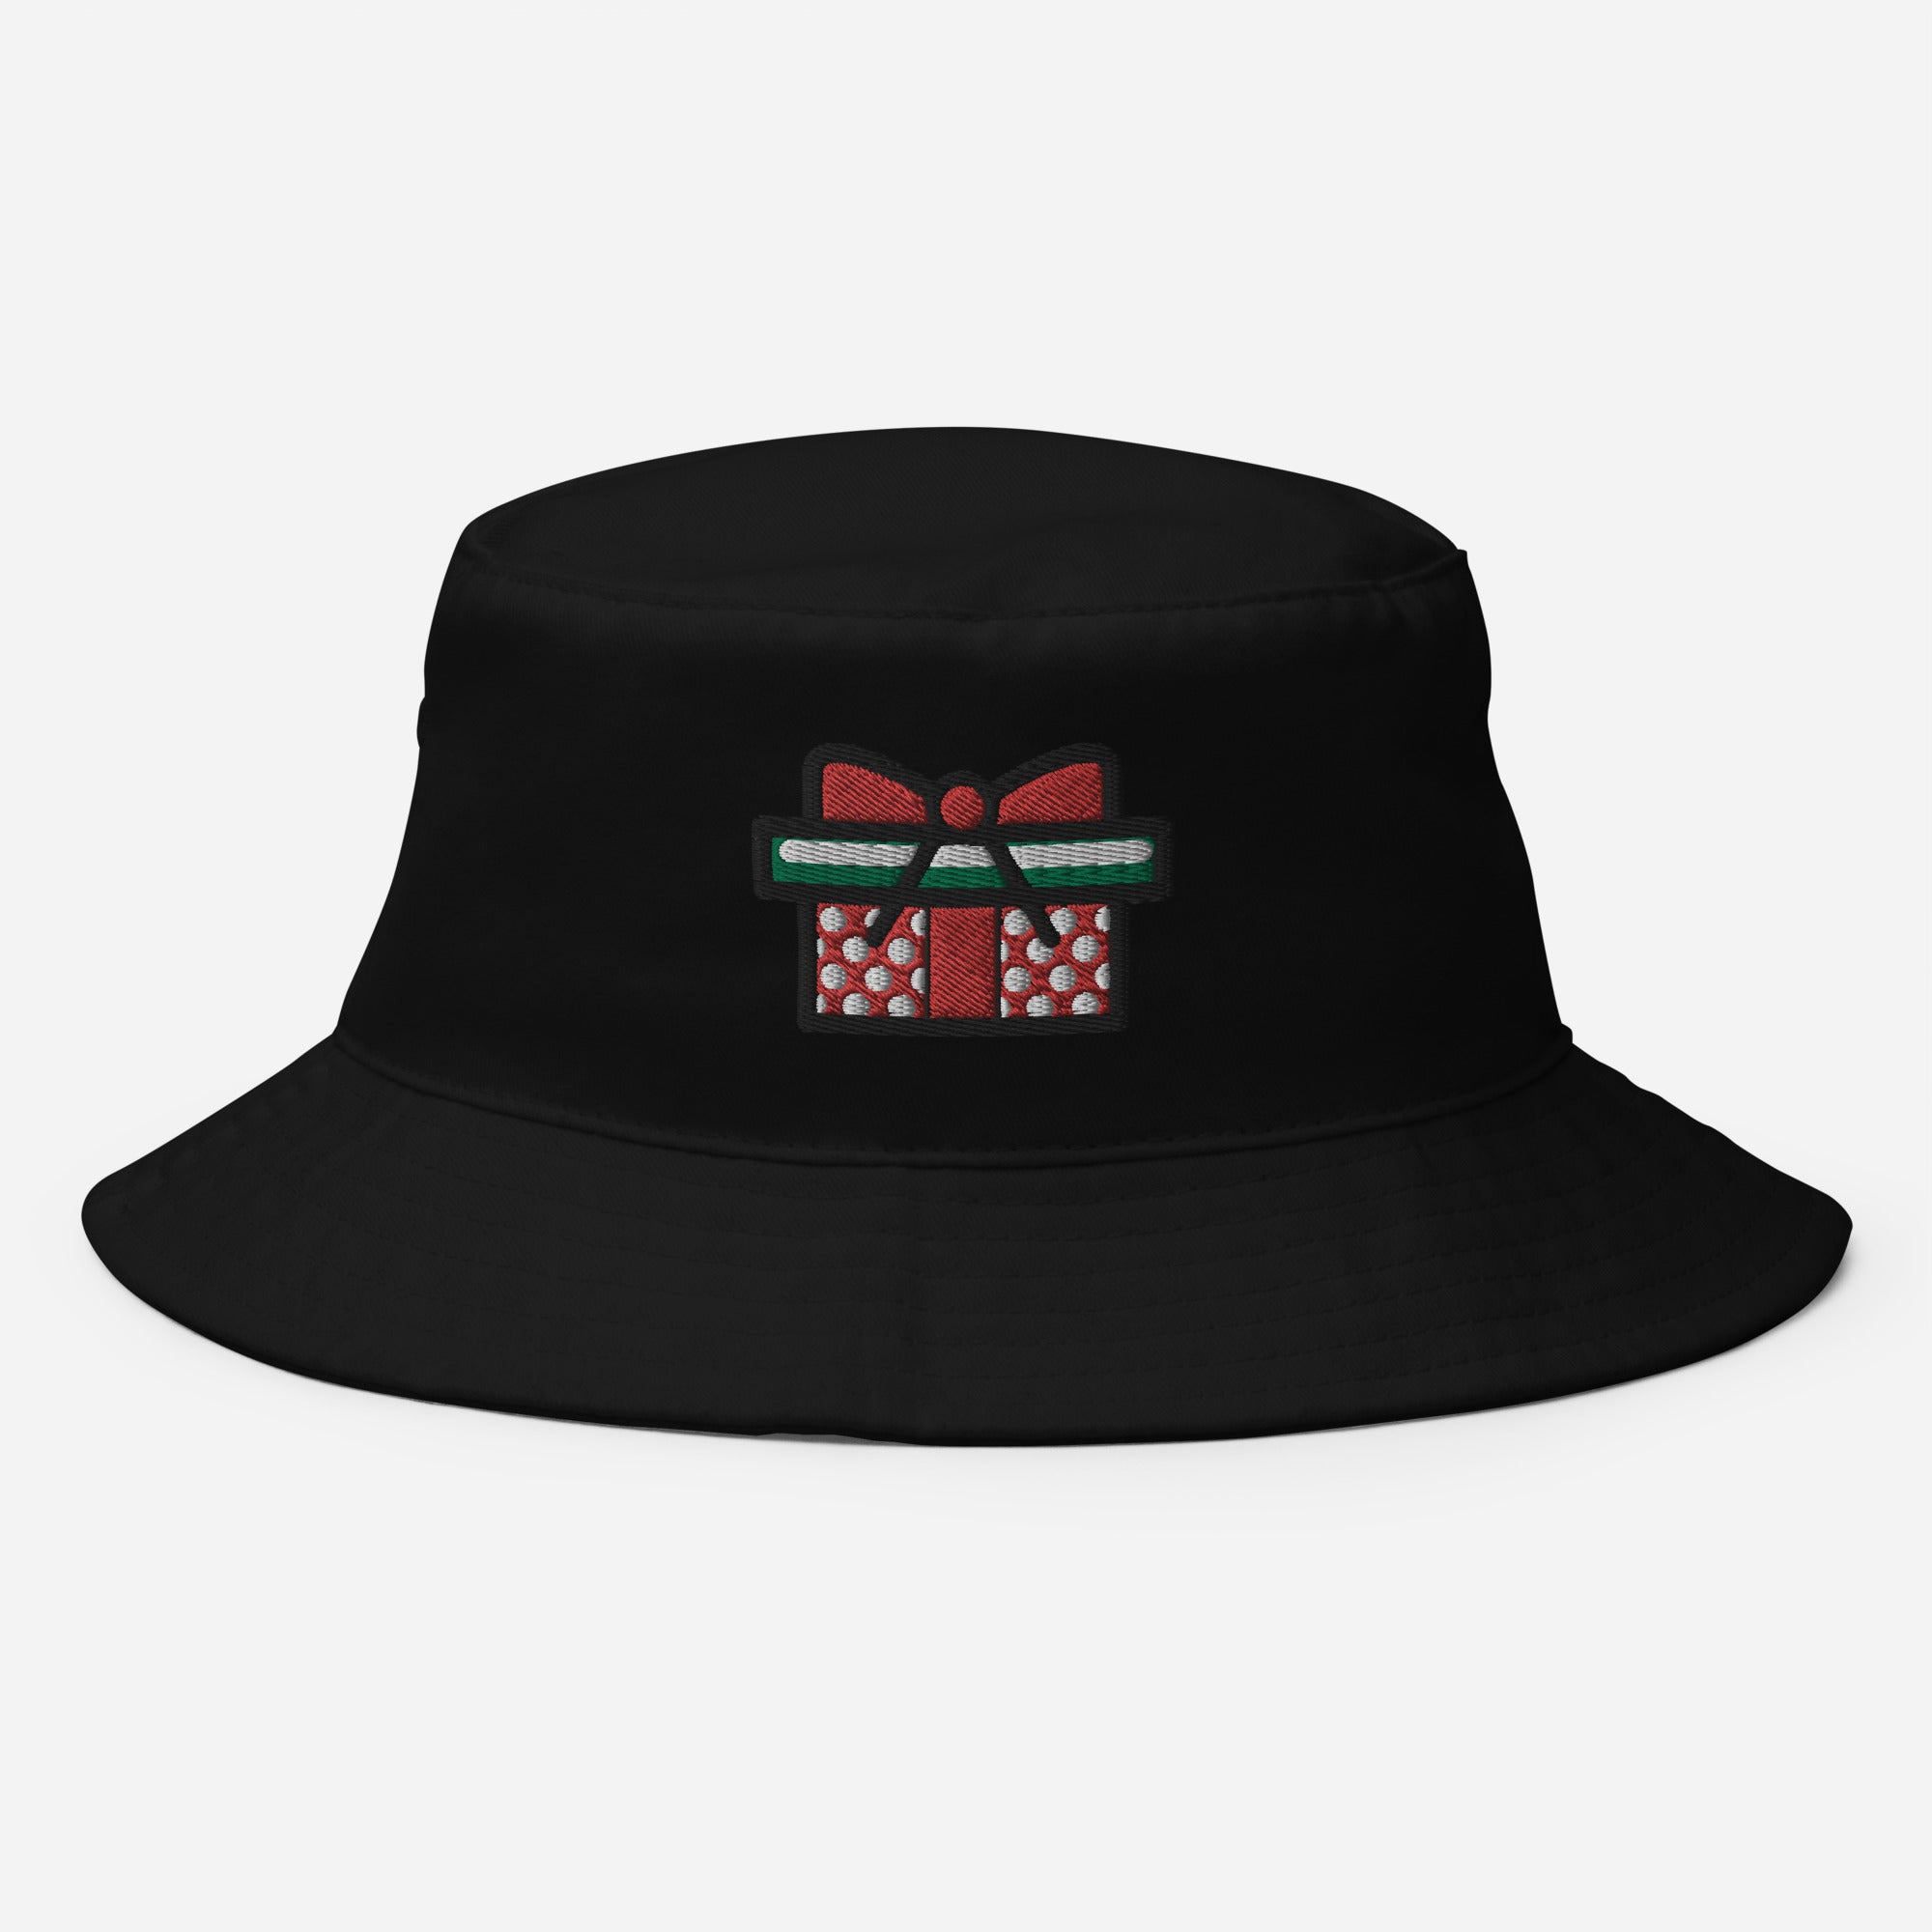 Gift Box Bucket Hat, Embroidered Christmas Bucket Hat, Handmade Xmas Festive Unisex Cotton Sun Hat